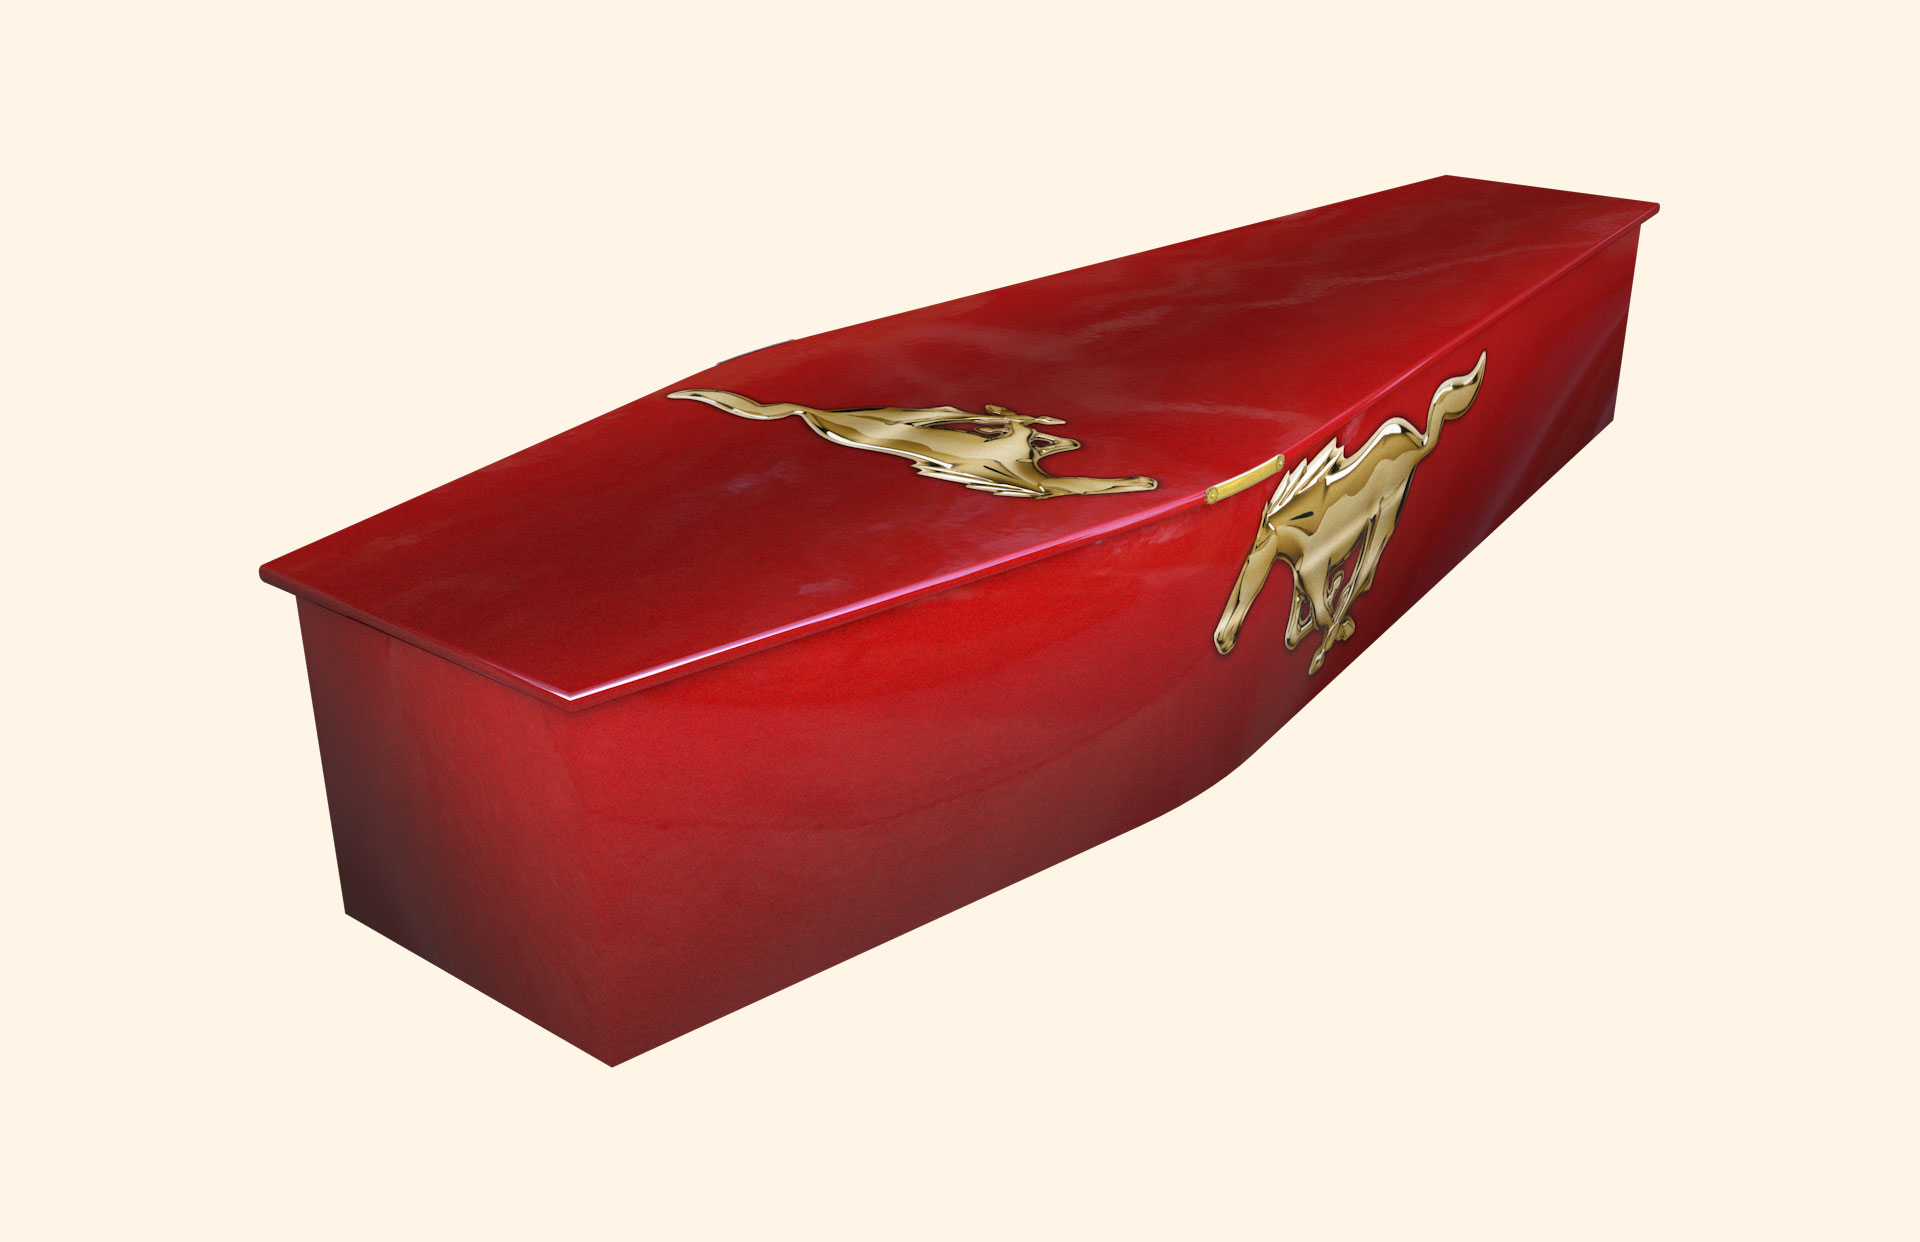 Golden Stallion design on a traditional coffin